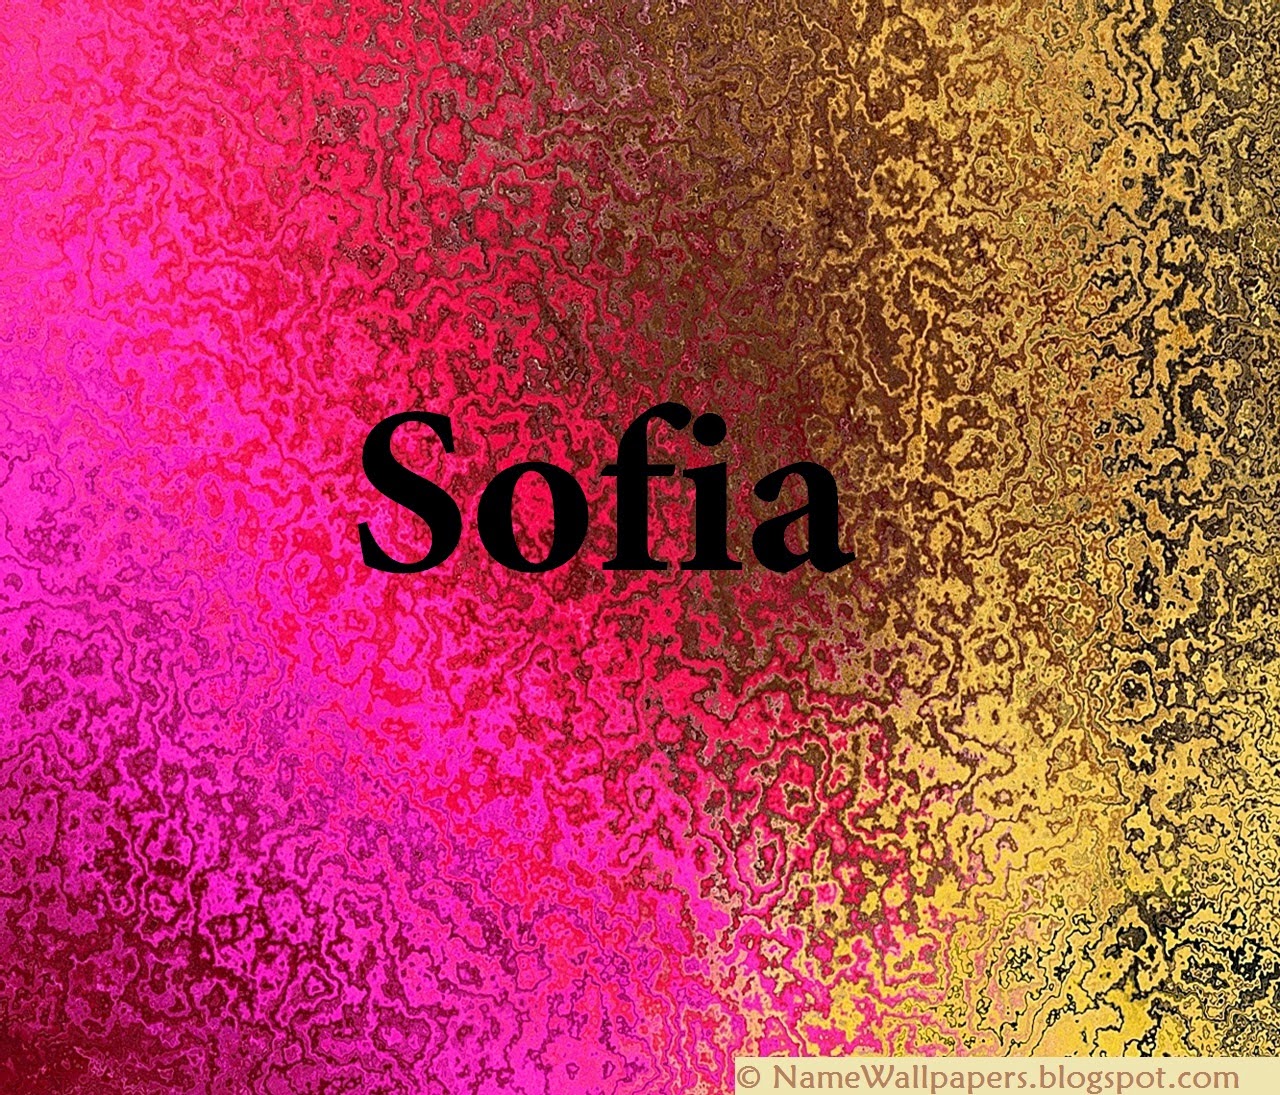 sofia name wallpaper,texto,rosado,fuente,modelo,diseño gráfico